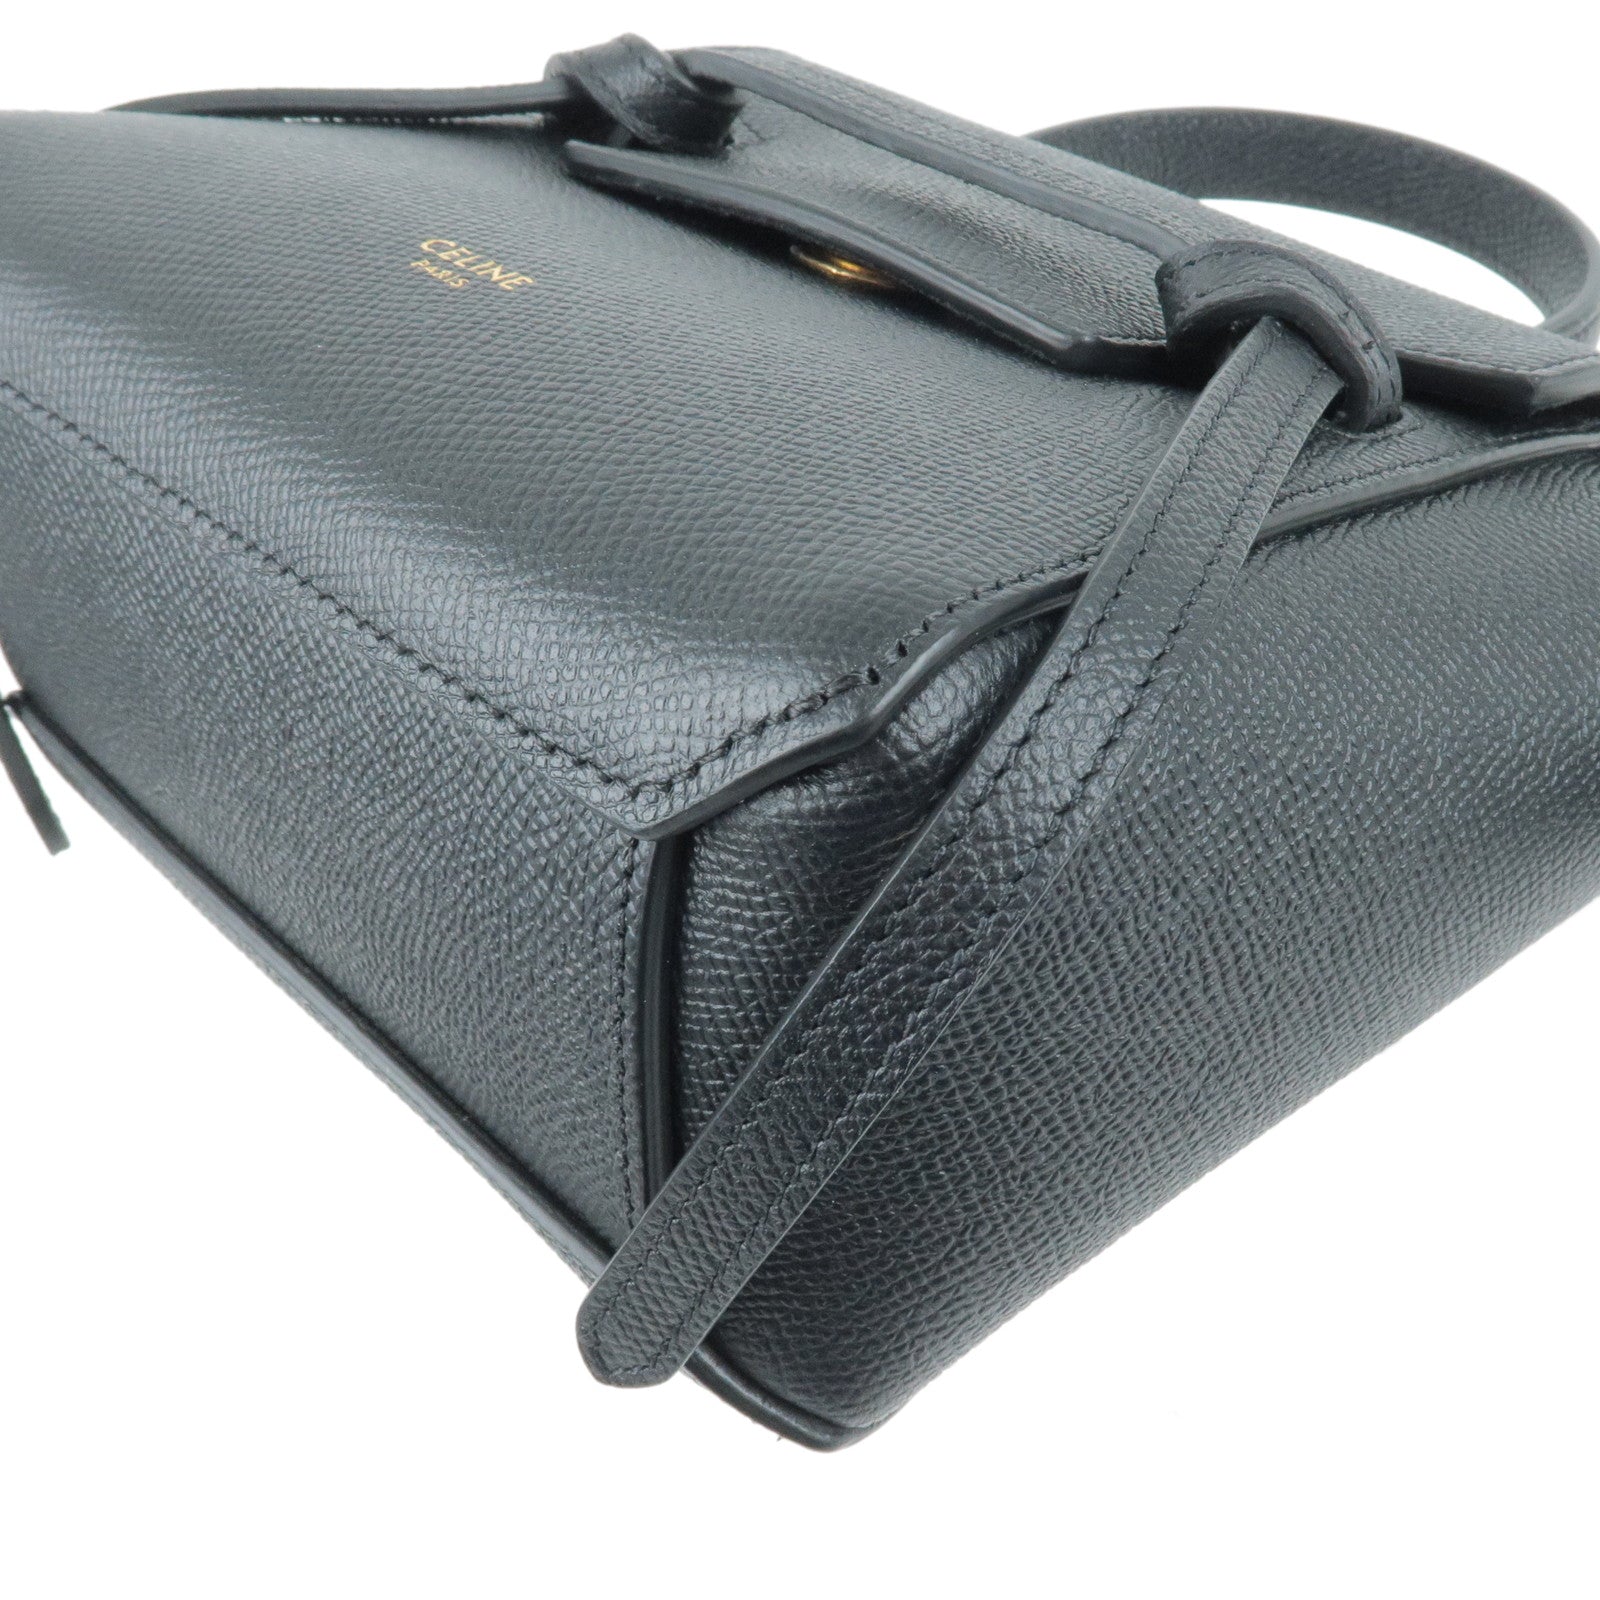 Pico - 2Way - 194263 – Celine Belt medium model handbag in black